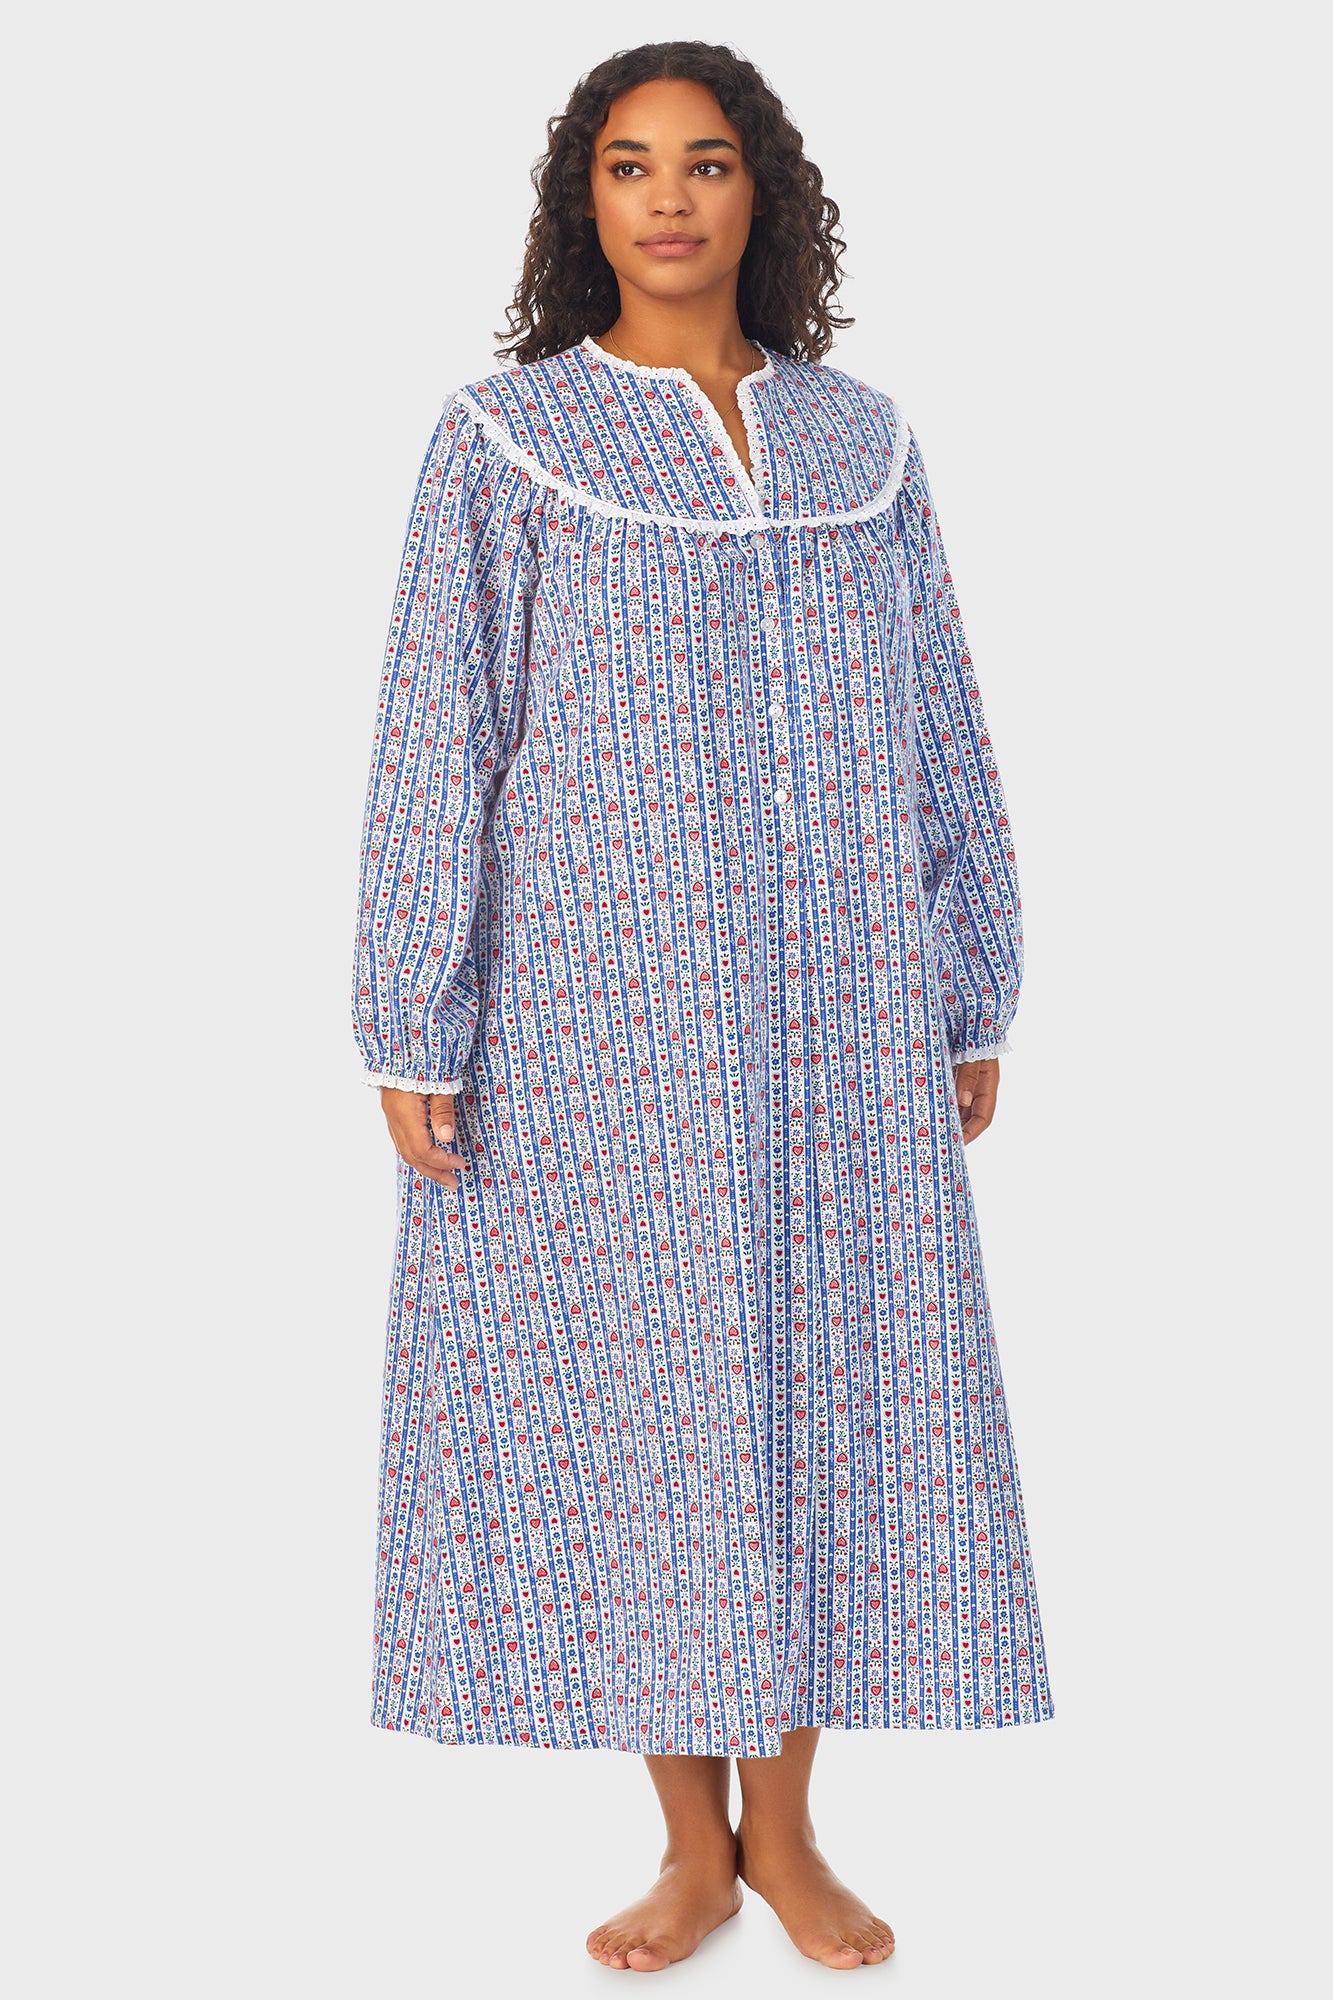 Women's Flannel Nightgowns & Nightshirts